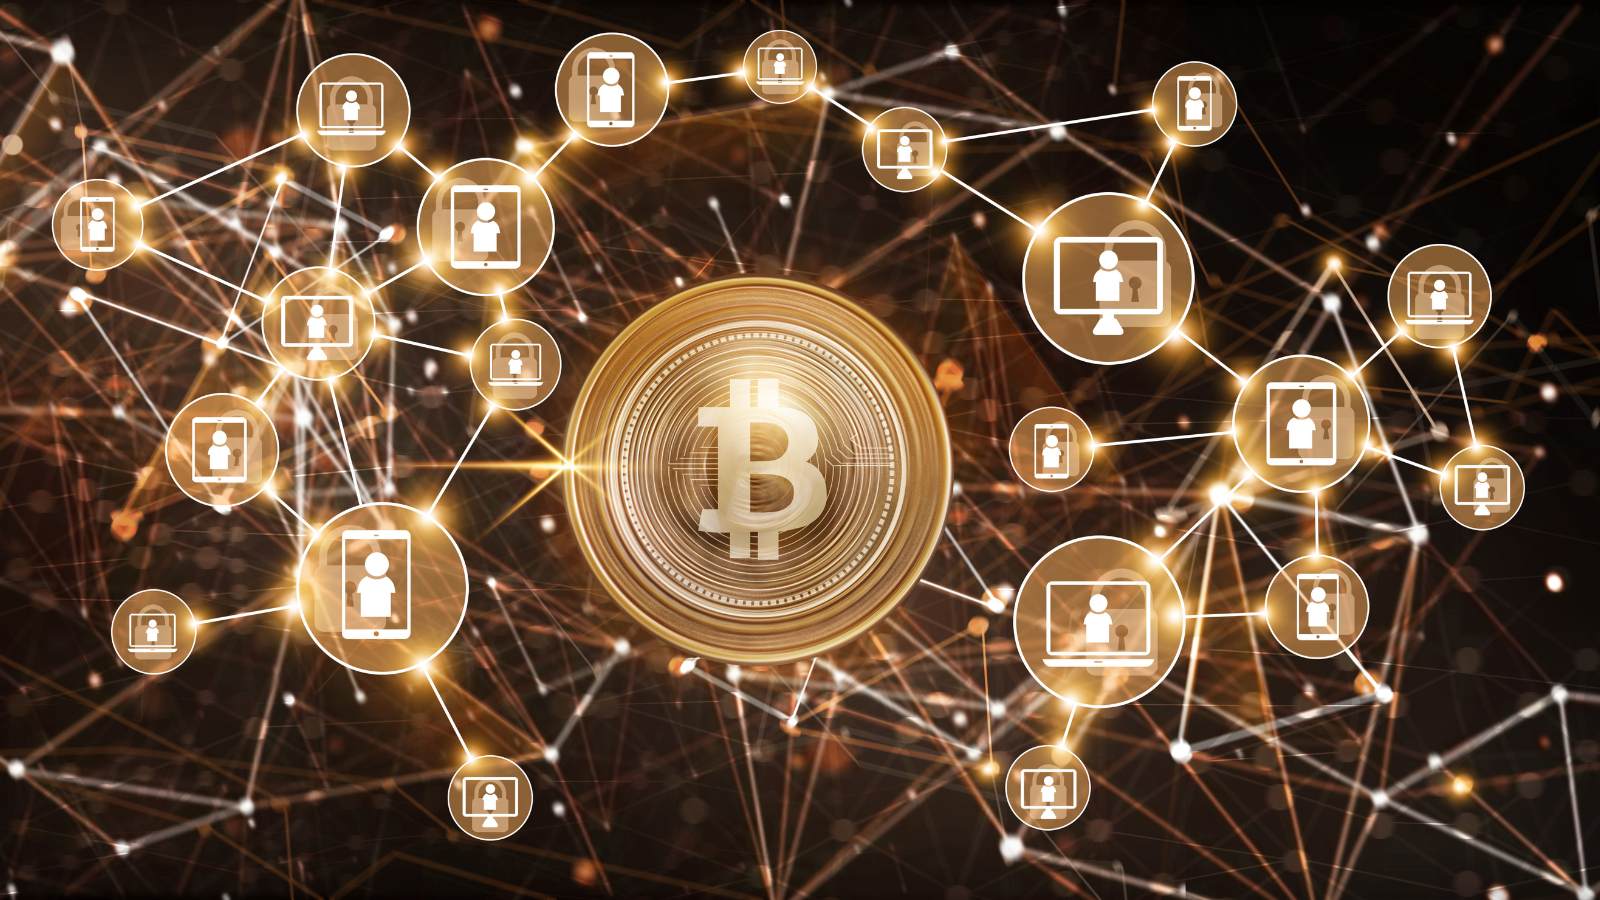 How Bitcoin Exchange Works?